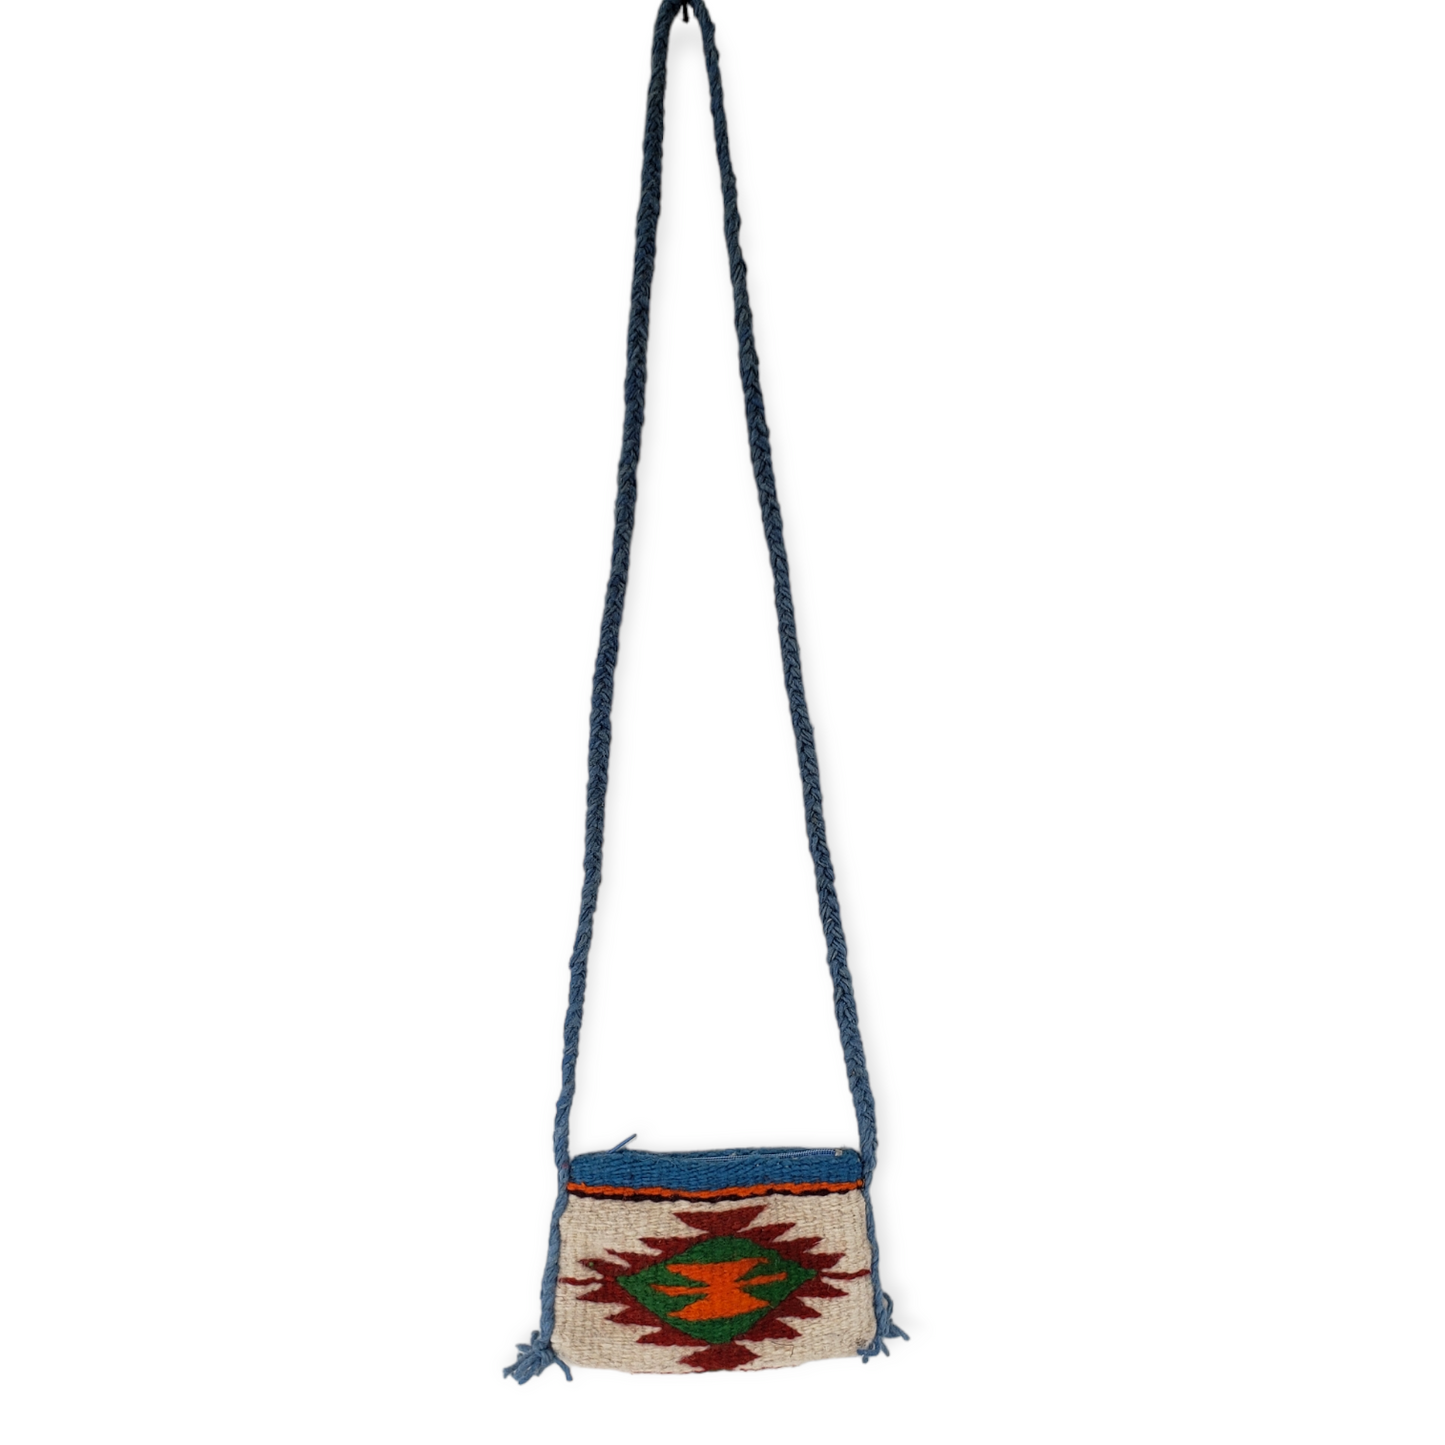 Mini Woven Bag Purse with Blue Strap